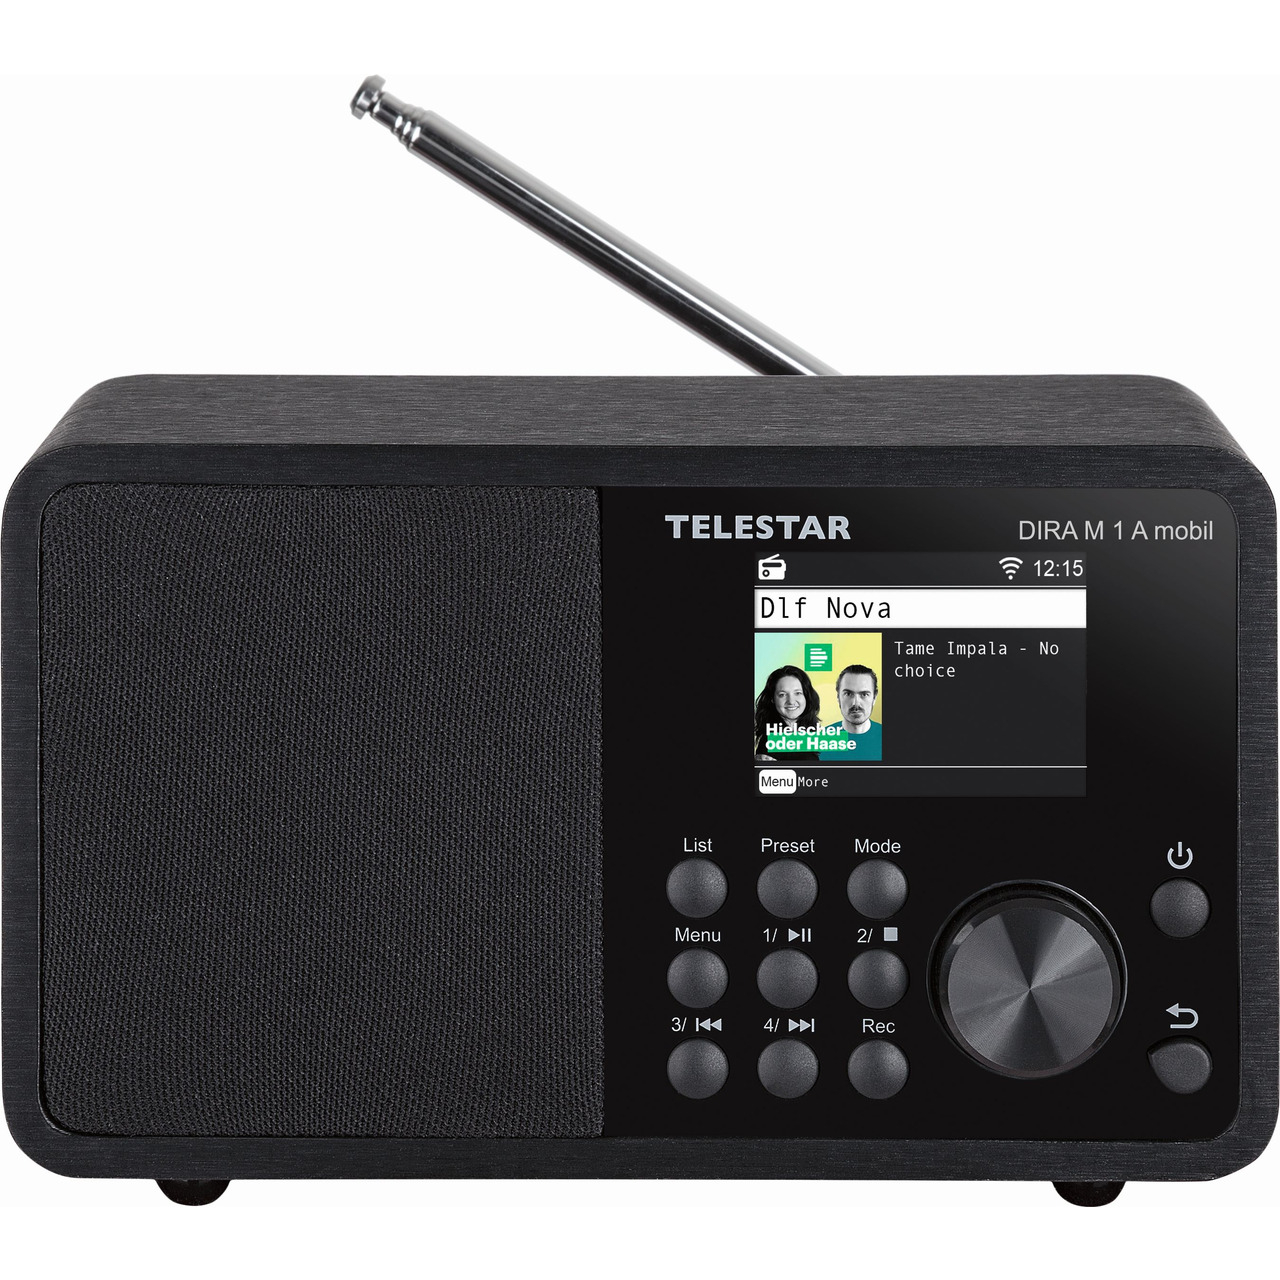 Telestar Hybrid-Digitalradio DIRA M1A mobil mit Notfall-Warnsystem EWF- DAB+-UKW-Internetradio- Akku